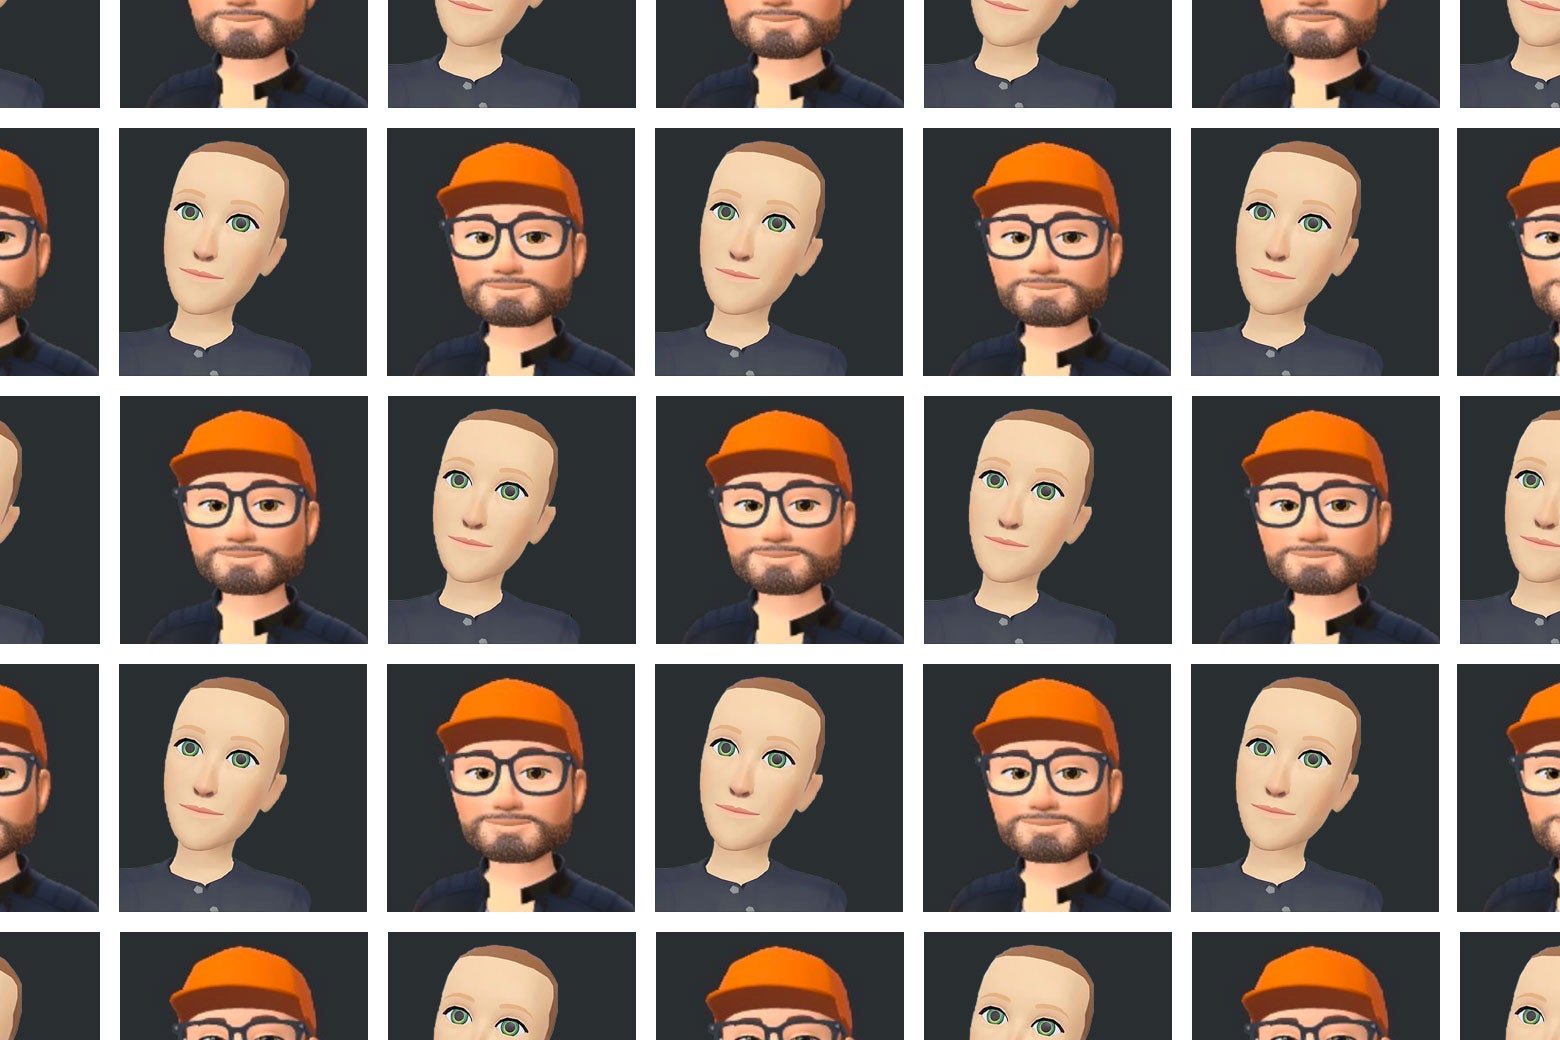 A grid of Josh Gondelman's and Mark Zuckerberg's repeated Horizon World avatar faces